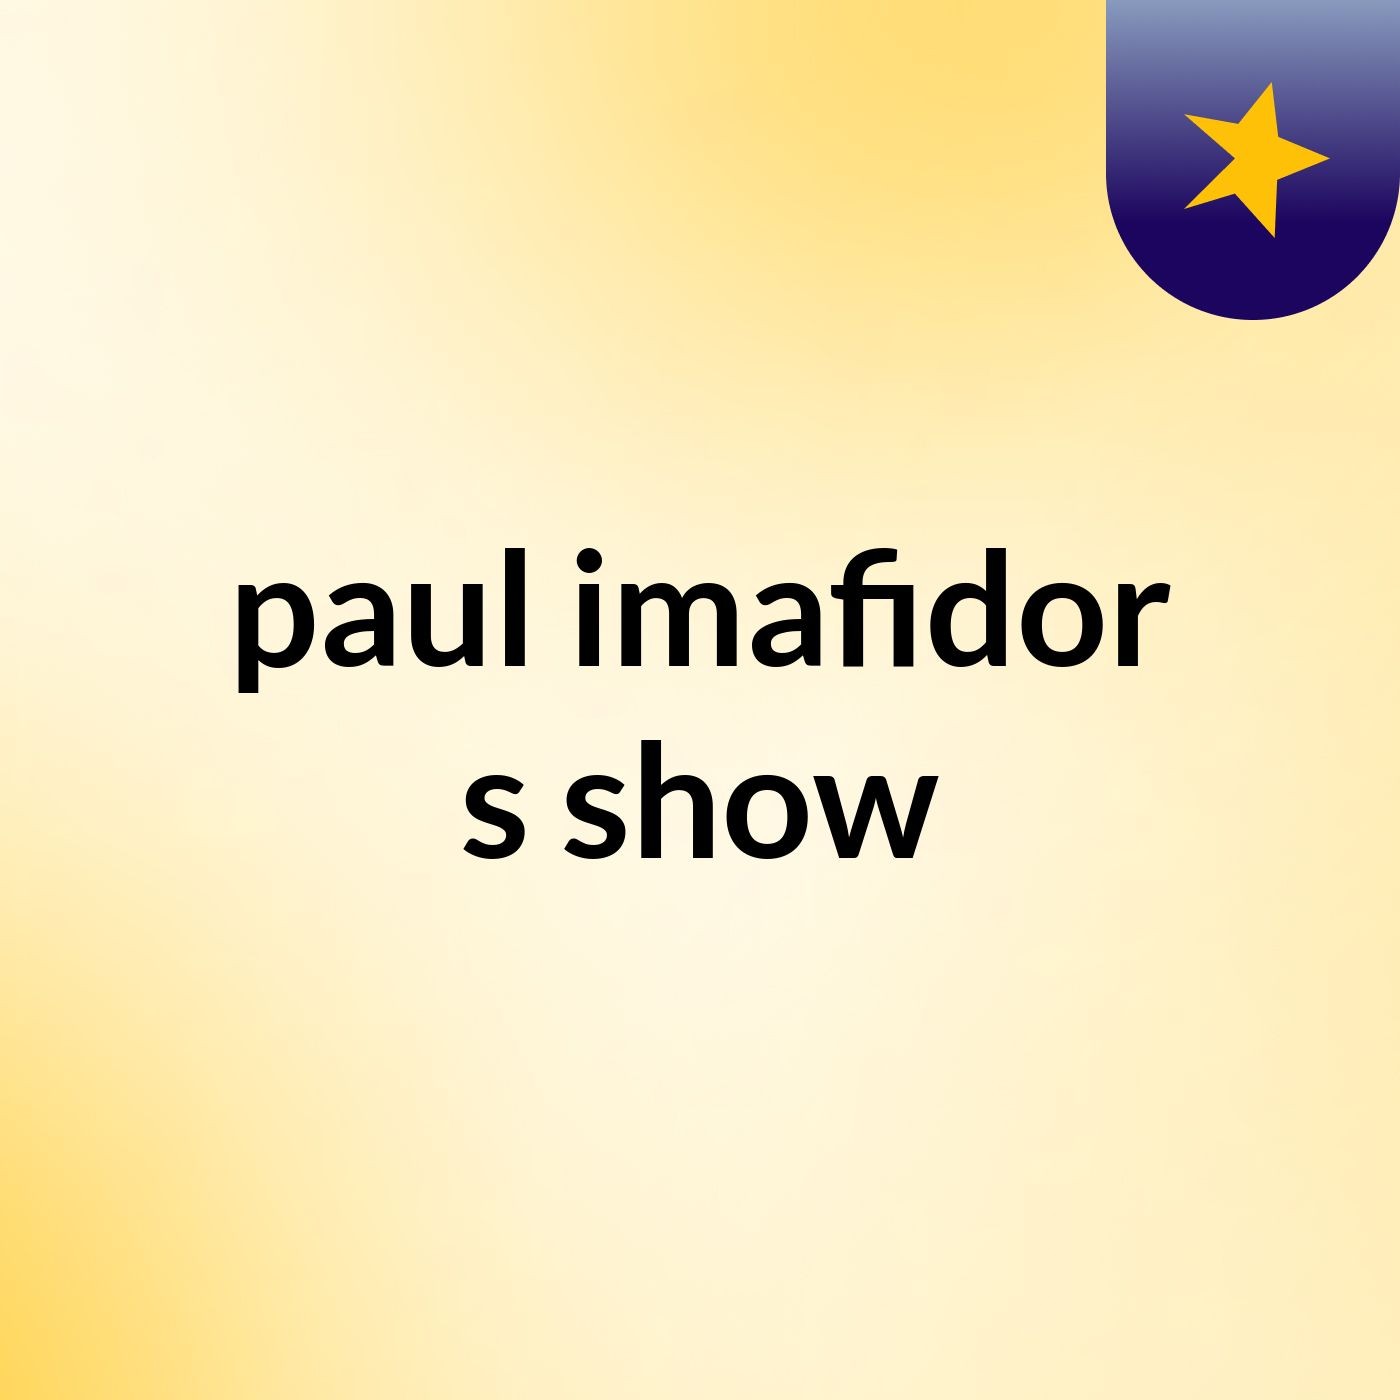 paul imafidor's show